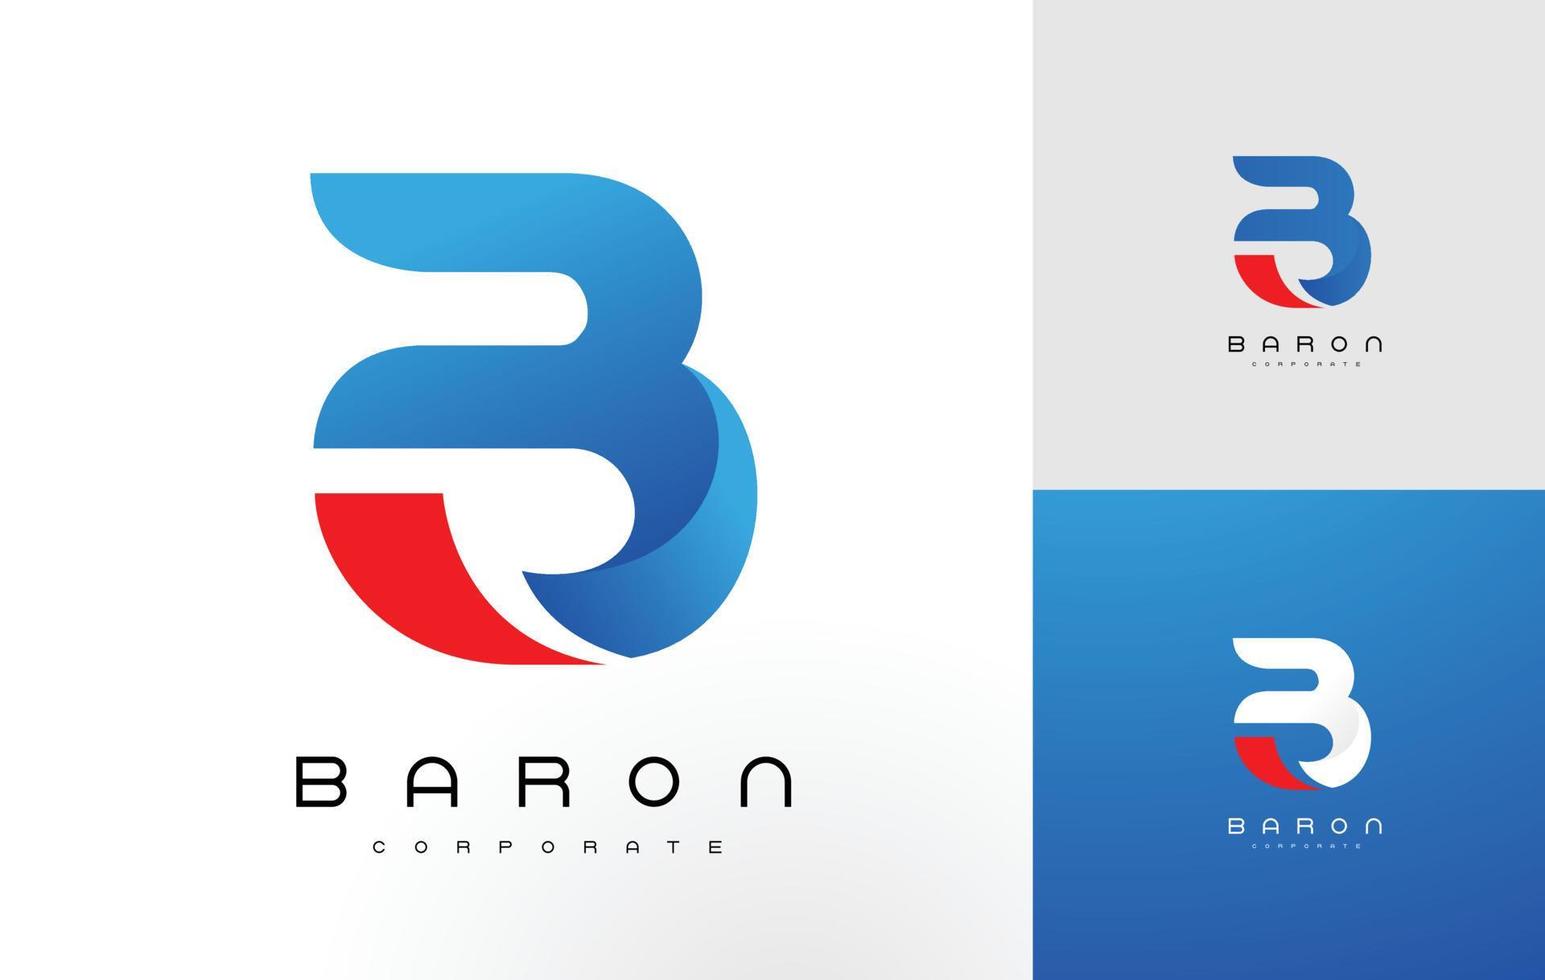 b logotyp blå. b bokstav ikon design vektor